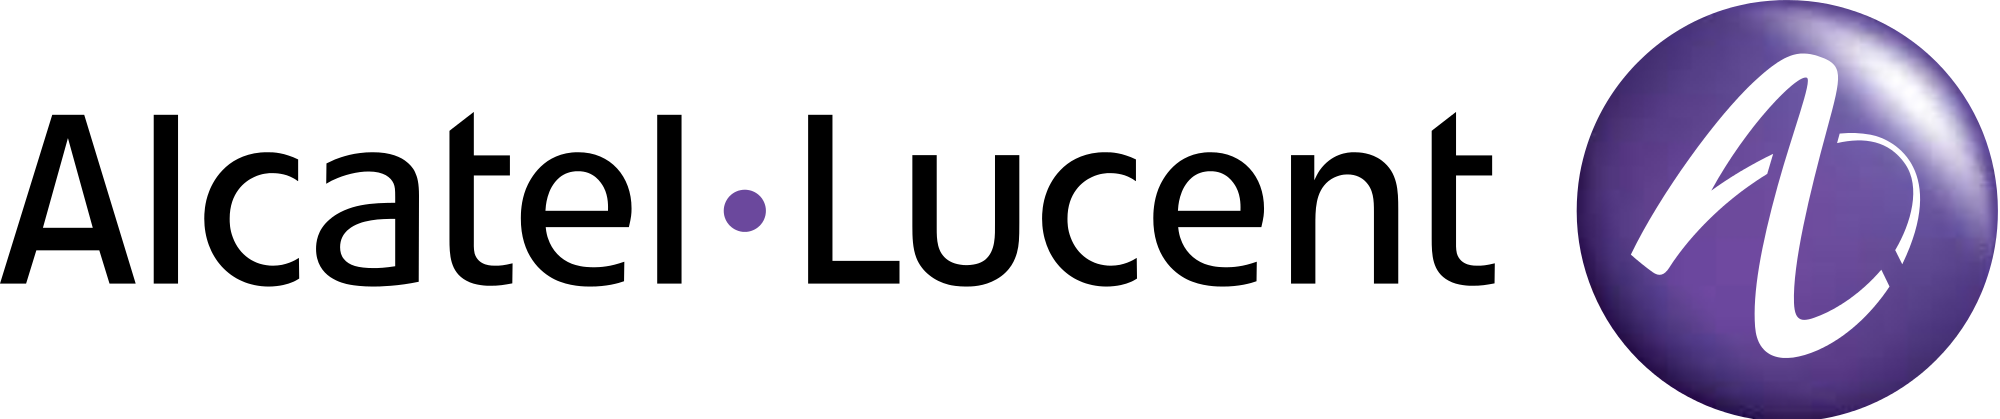 Alcatel Lucent Logo Vector